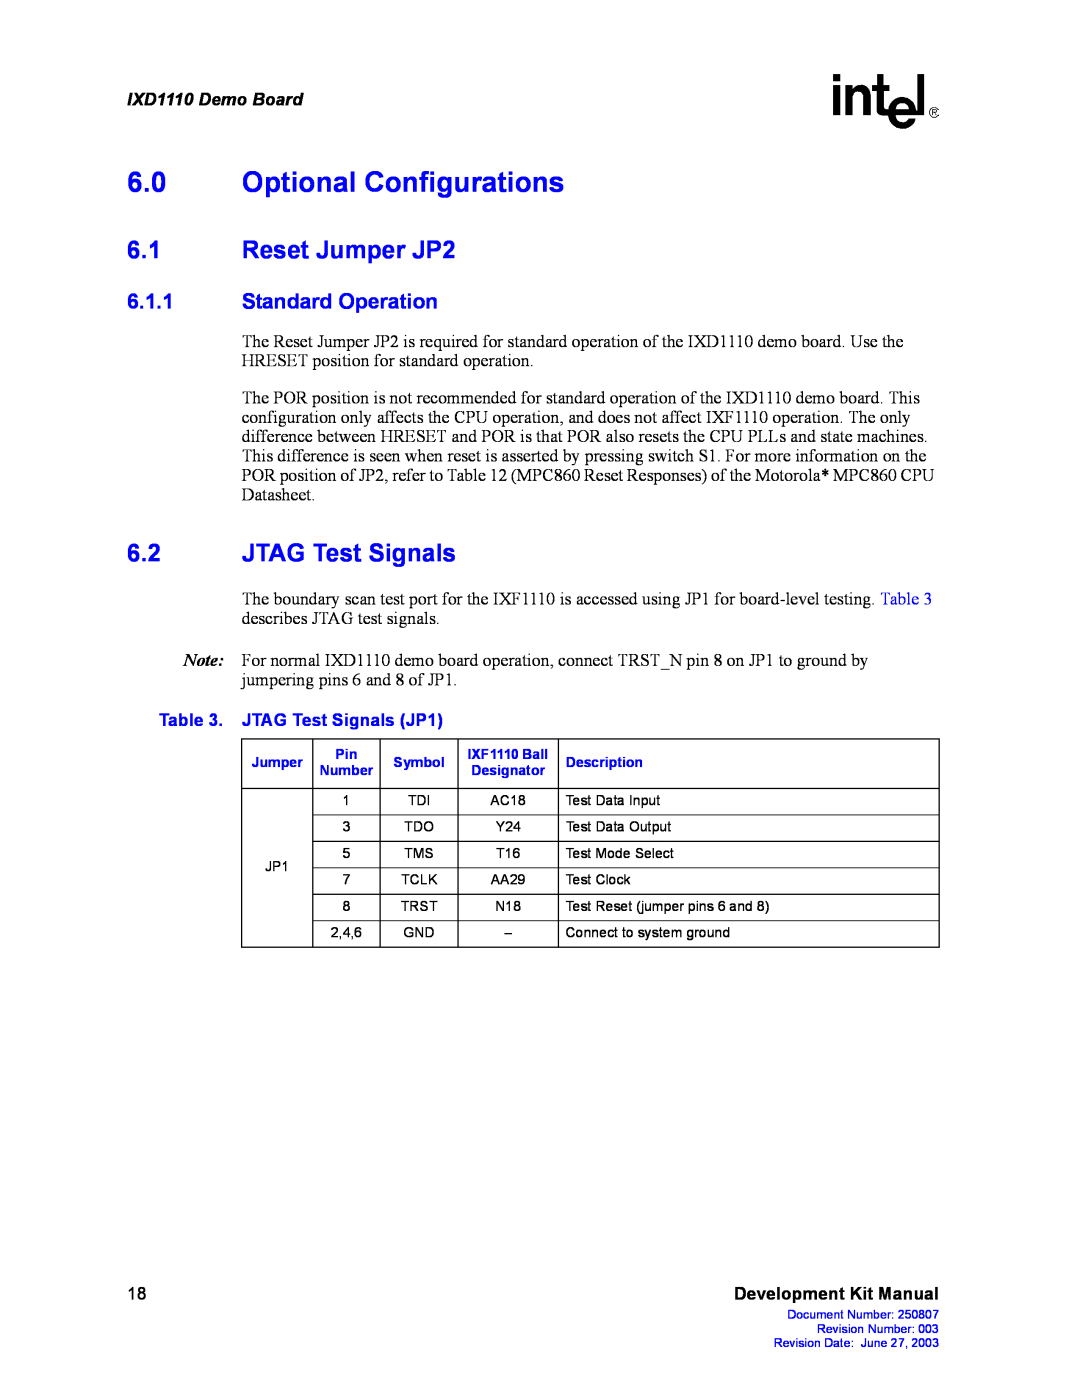 Intel Optional Configurations, Reset Jumper JP2, Standard Operation, JTAG Test Signals JP1, IXD1110 Demo Board 